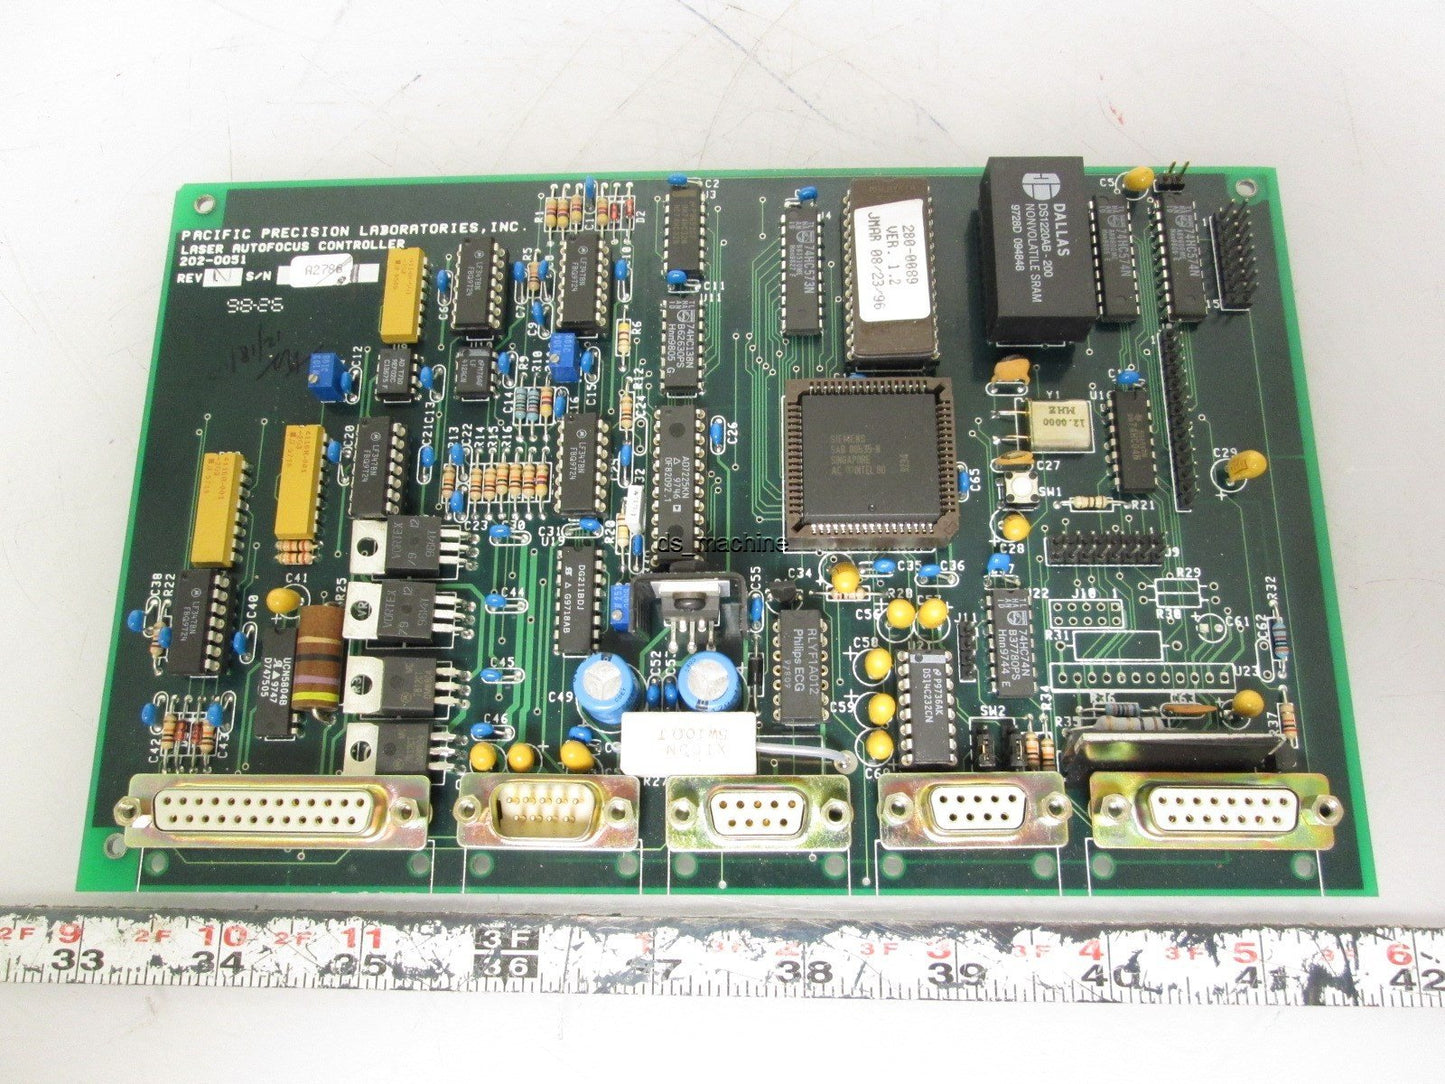 Used Pacific Precision Labs 202-0051 Rev. N Laser Autofocus Controller Board